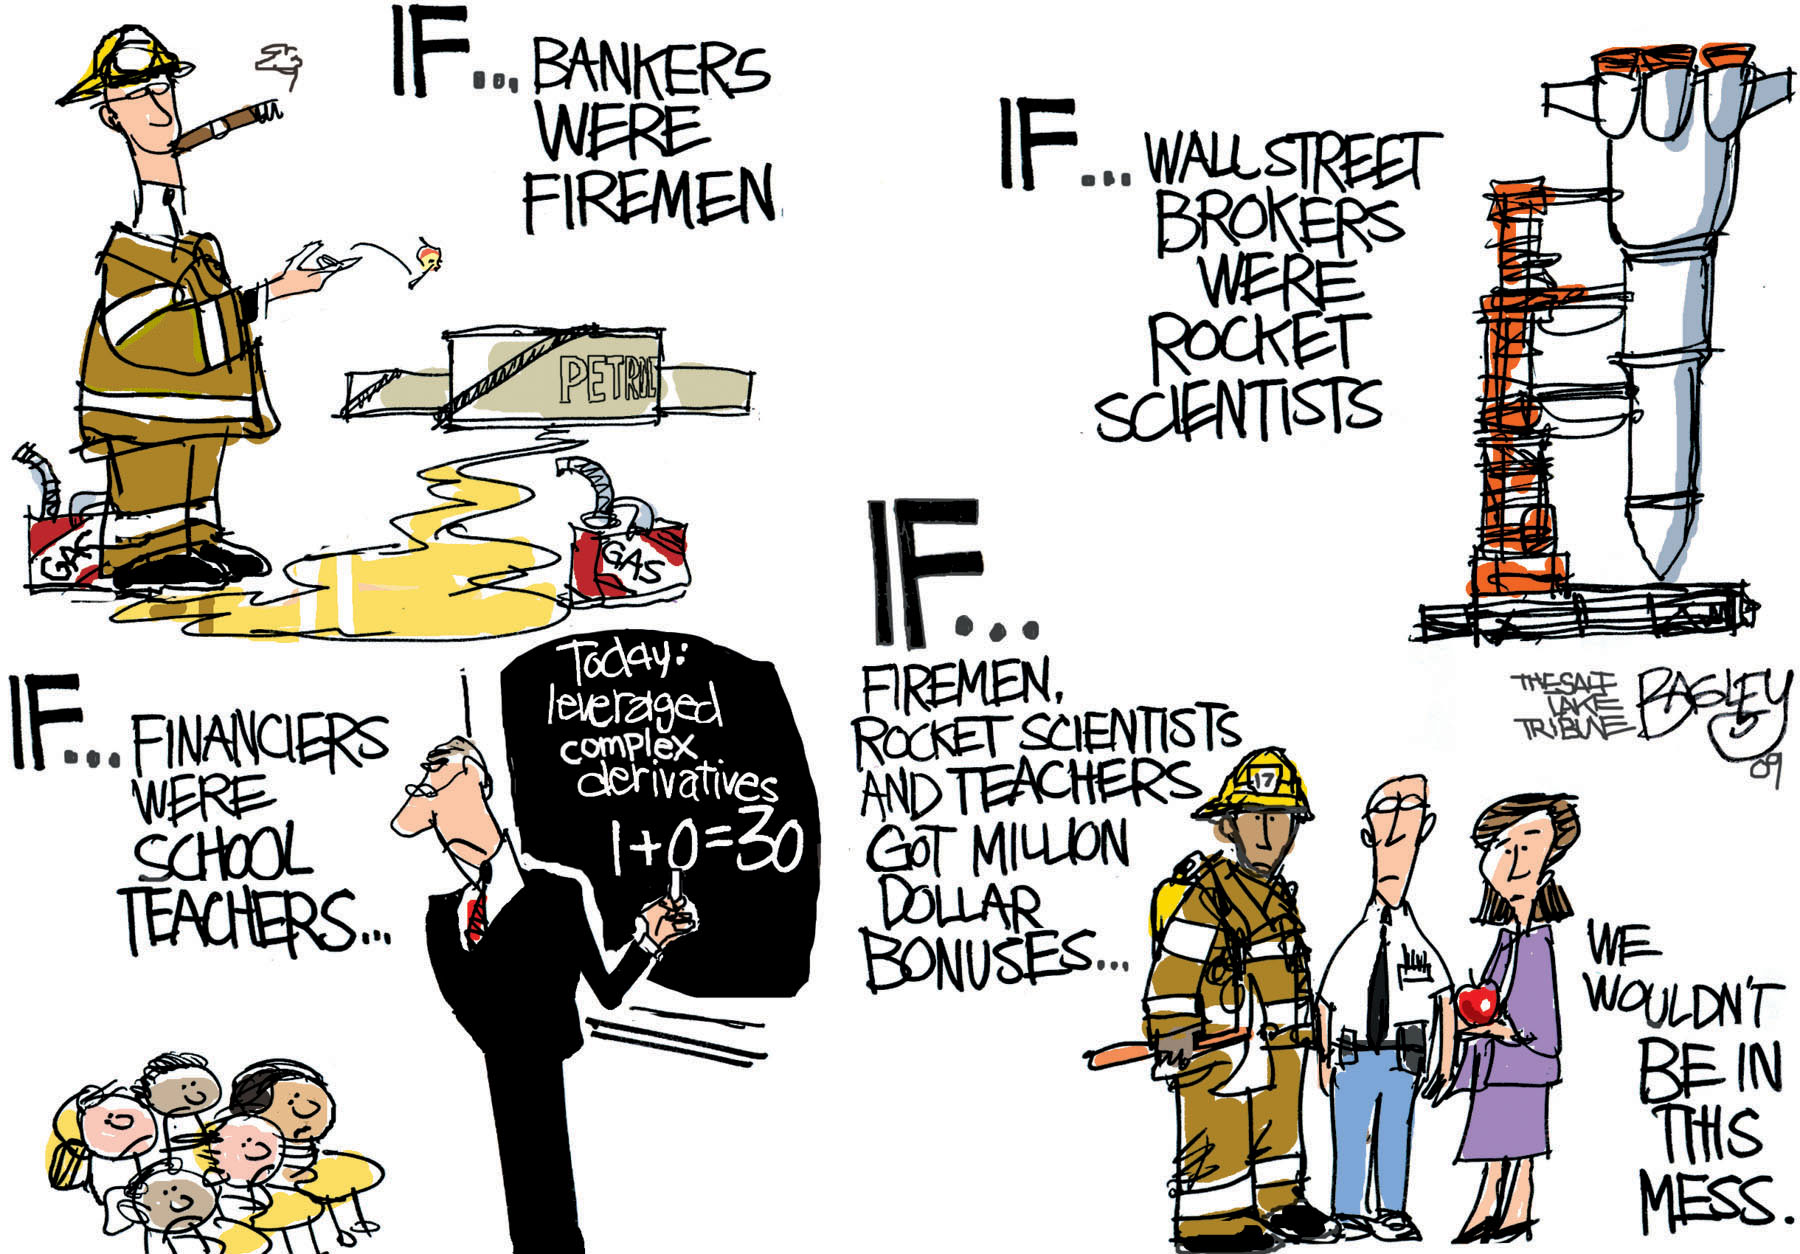 if-bankers-were_firemen.jpg